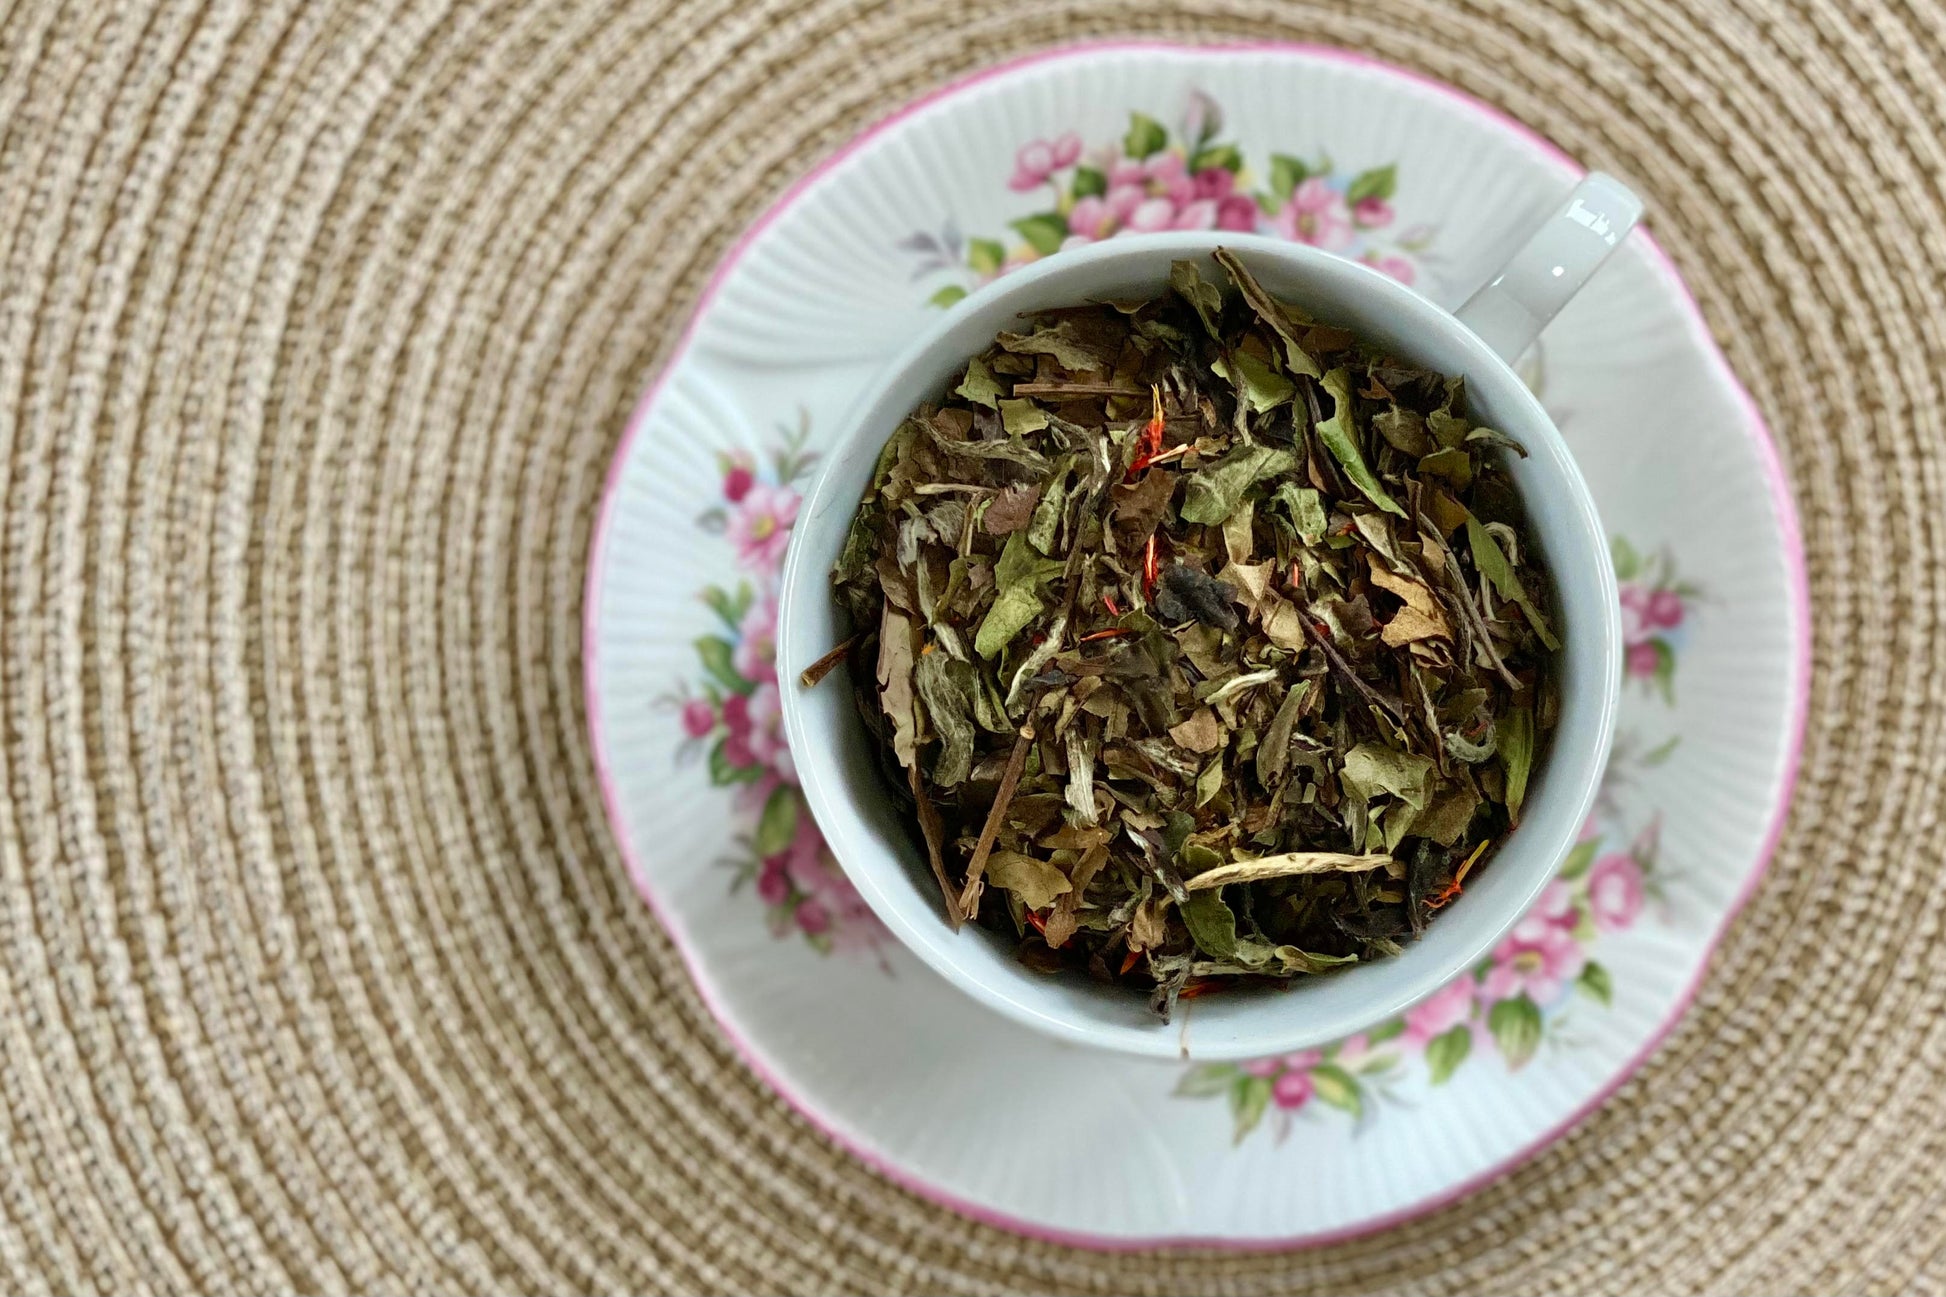 Teacup full of white tea leaf with safflower petals